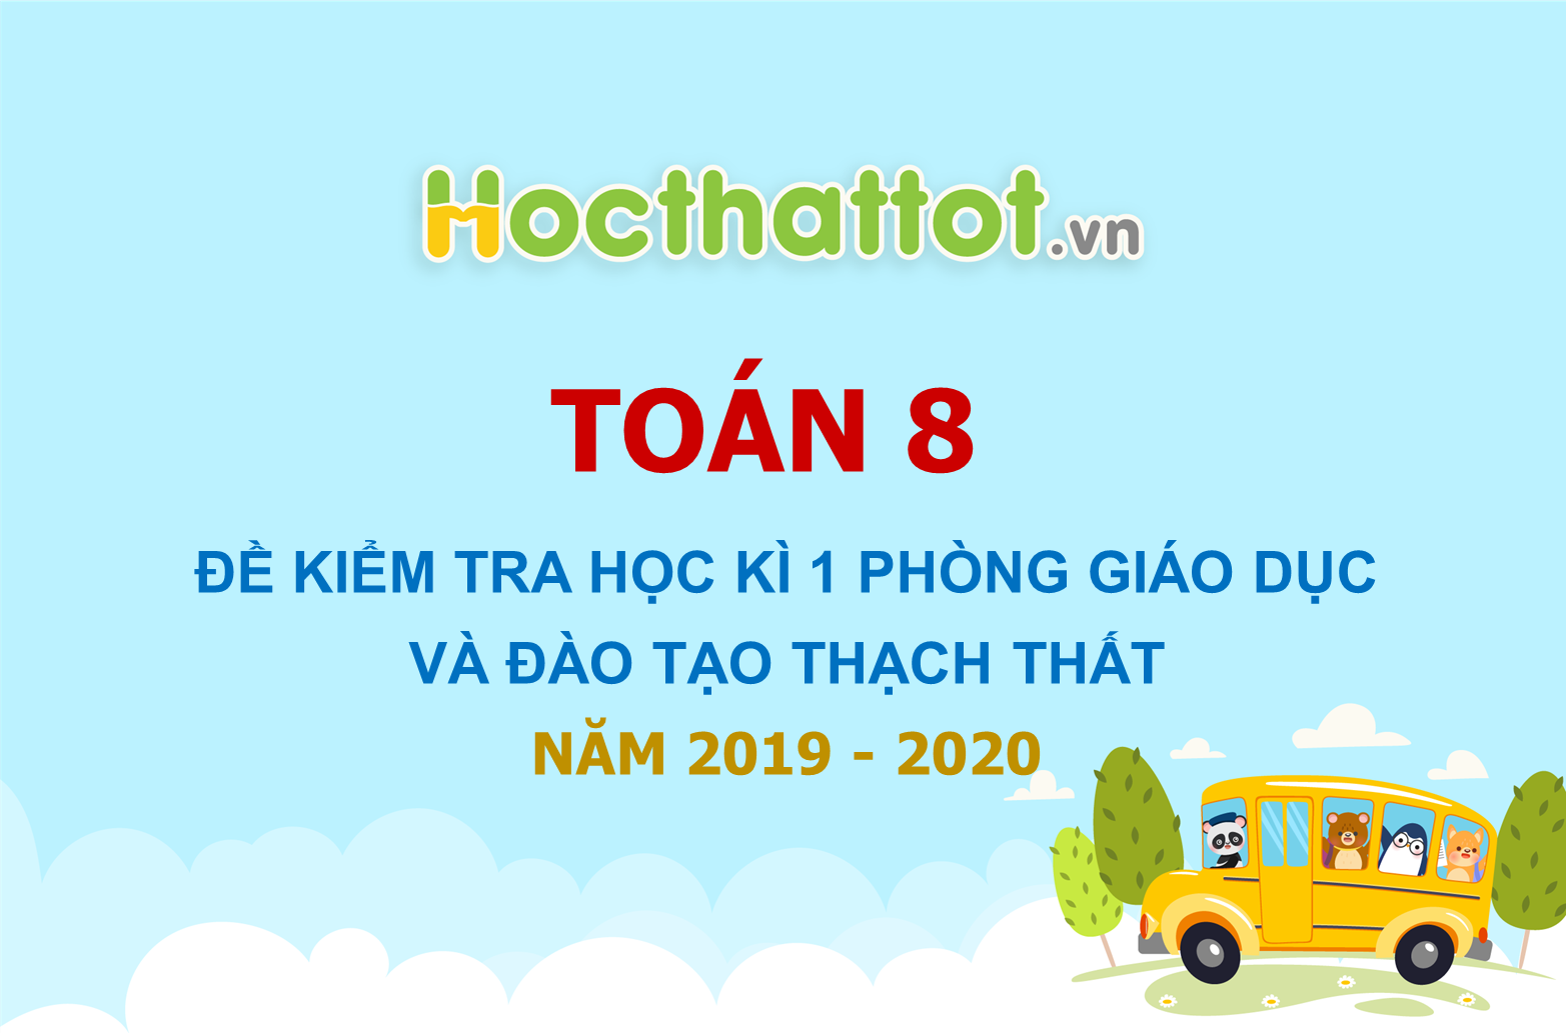 de-thi-hoc-ky-1-toan-8-nam-2019-2020-phong-gddt-thach-that-ha-noi